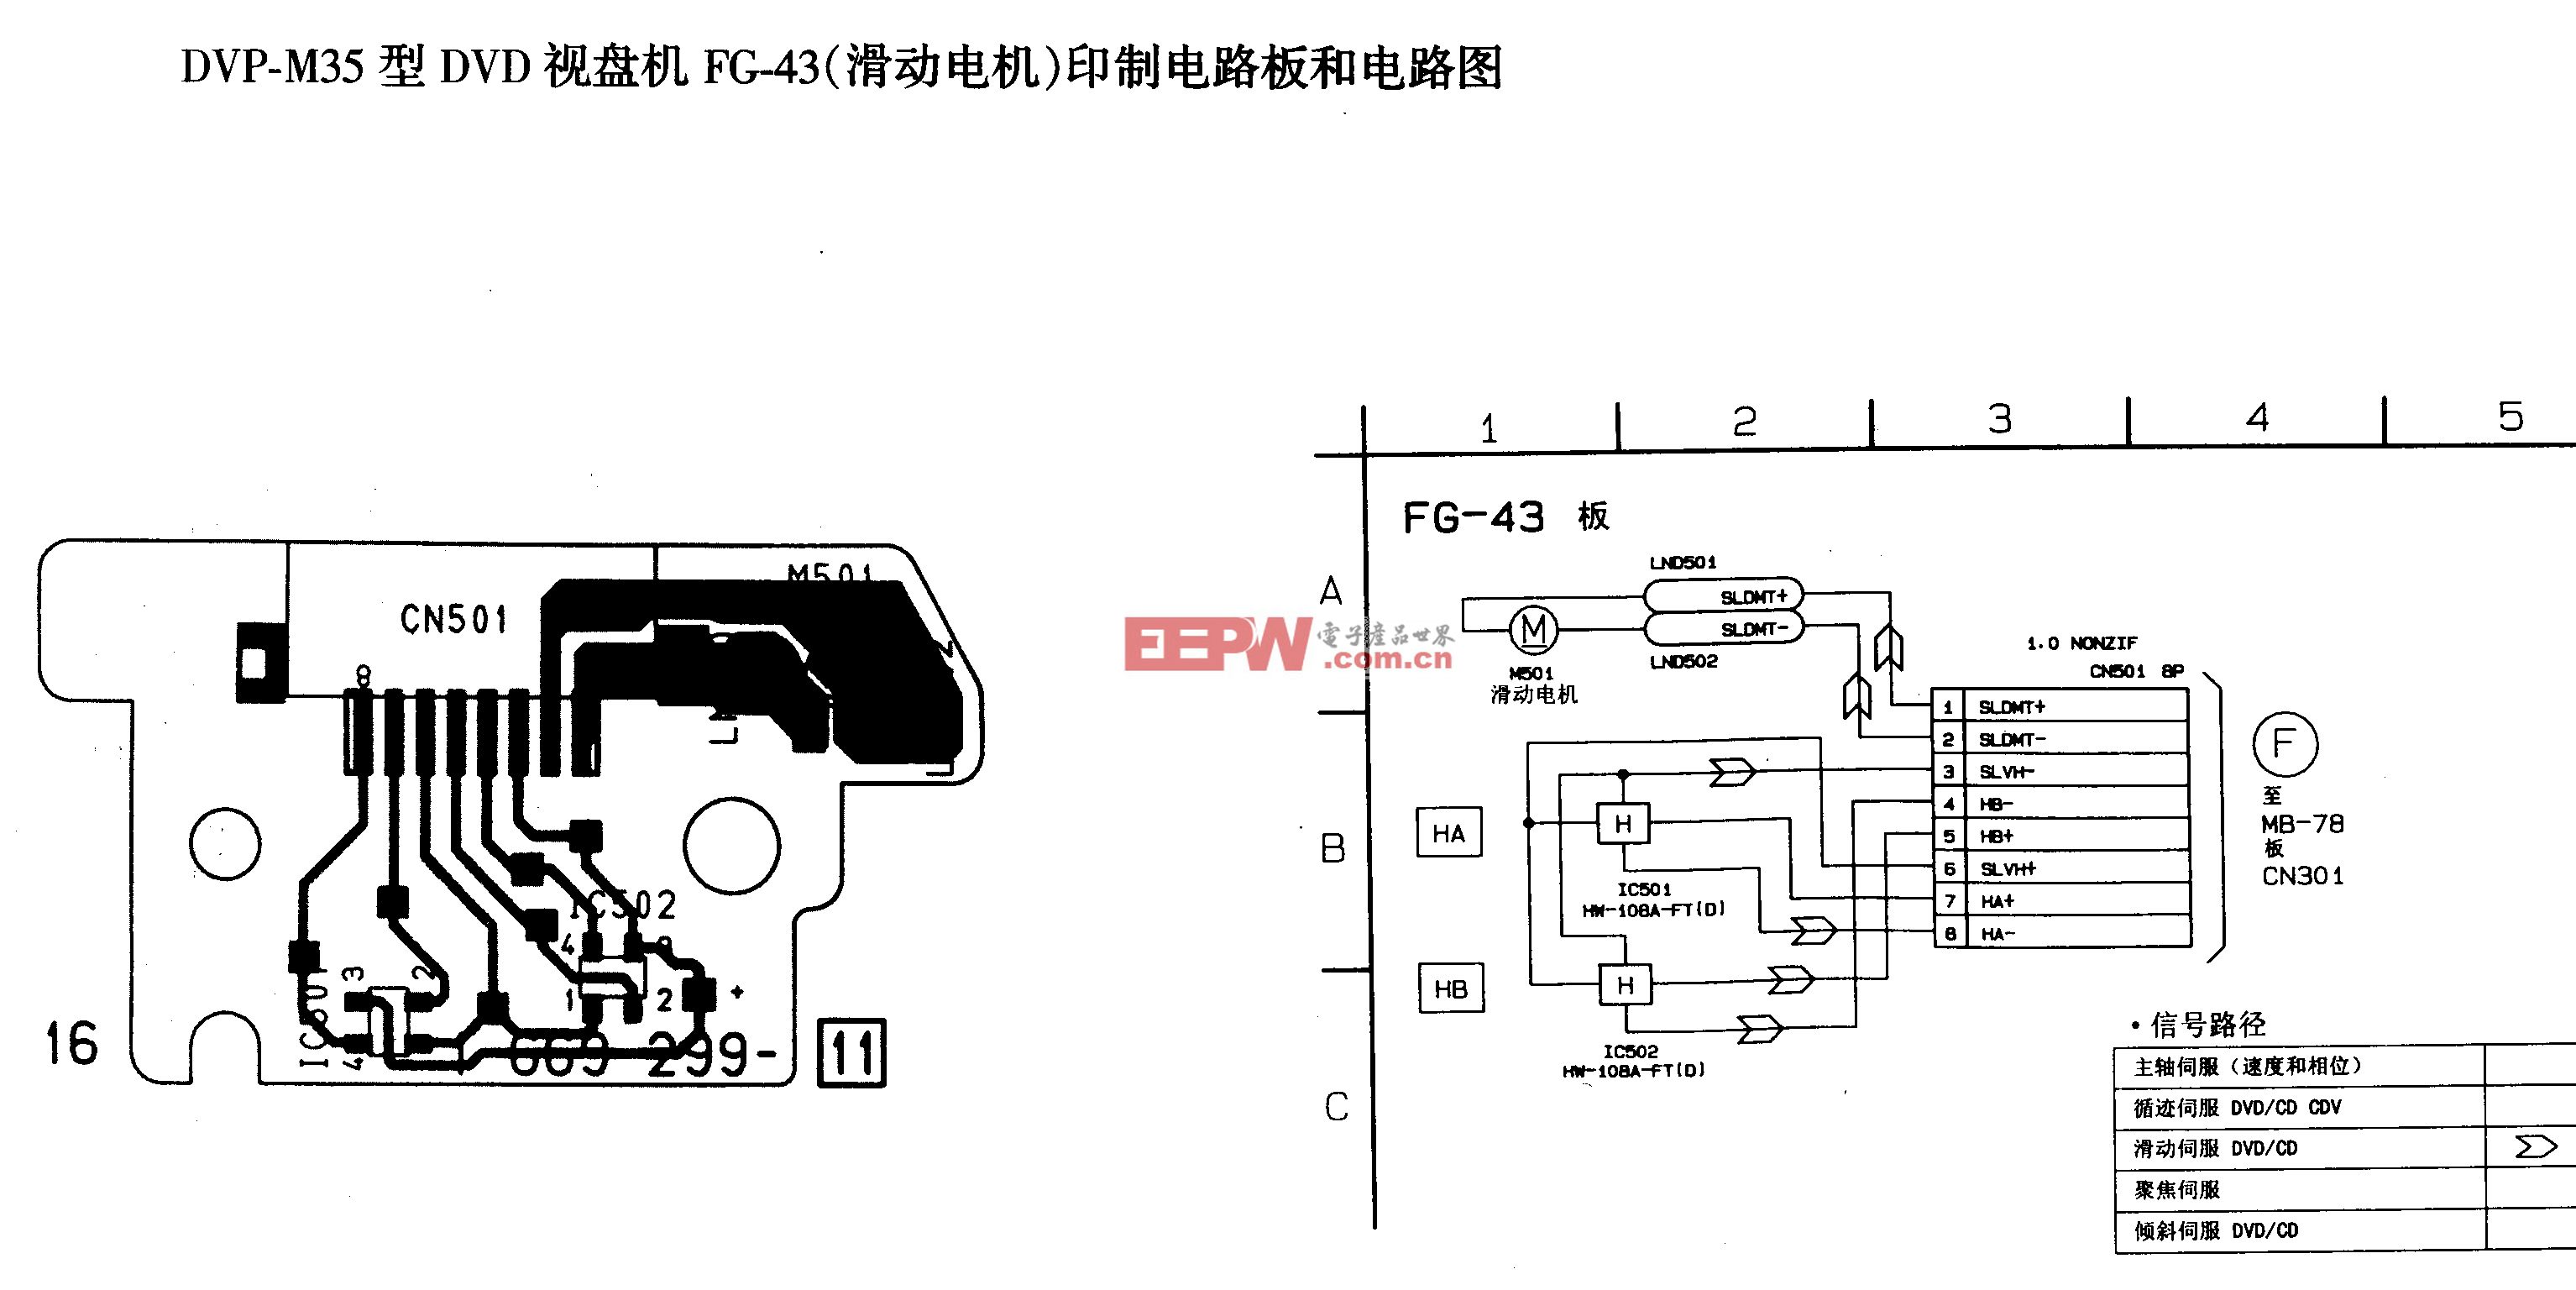 SONY DVP-M35型DVD-滑动电机印刷电路板和电路图